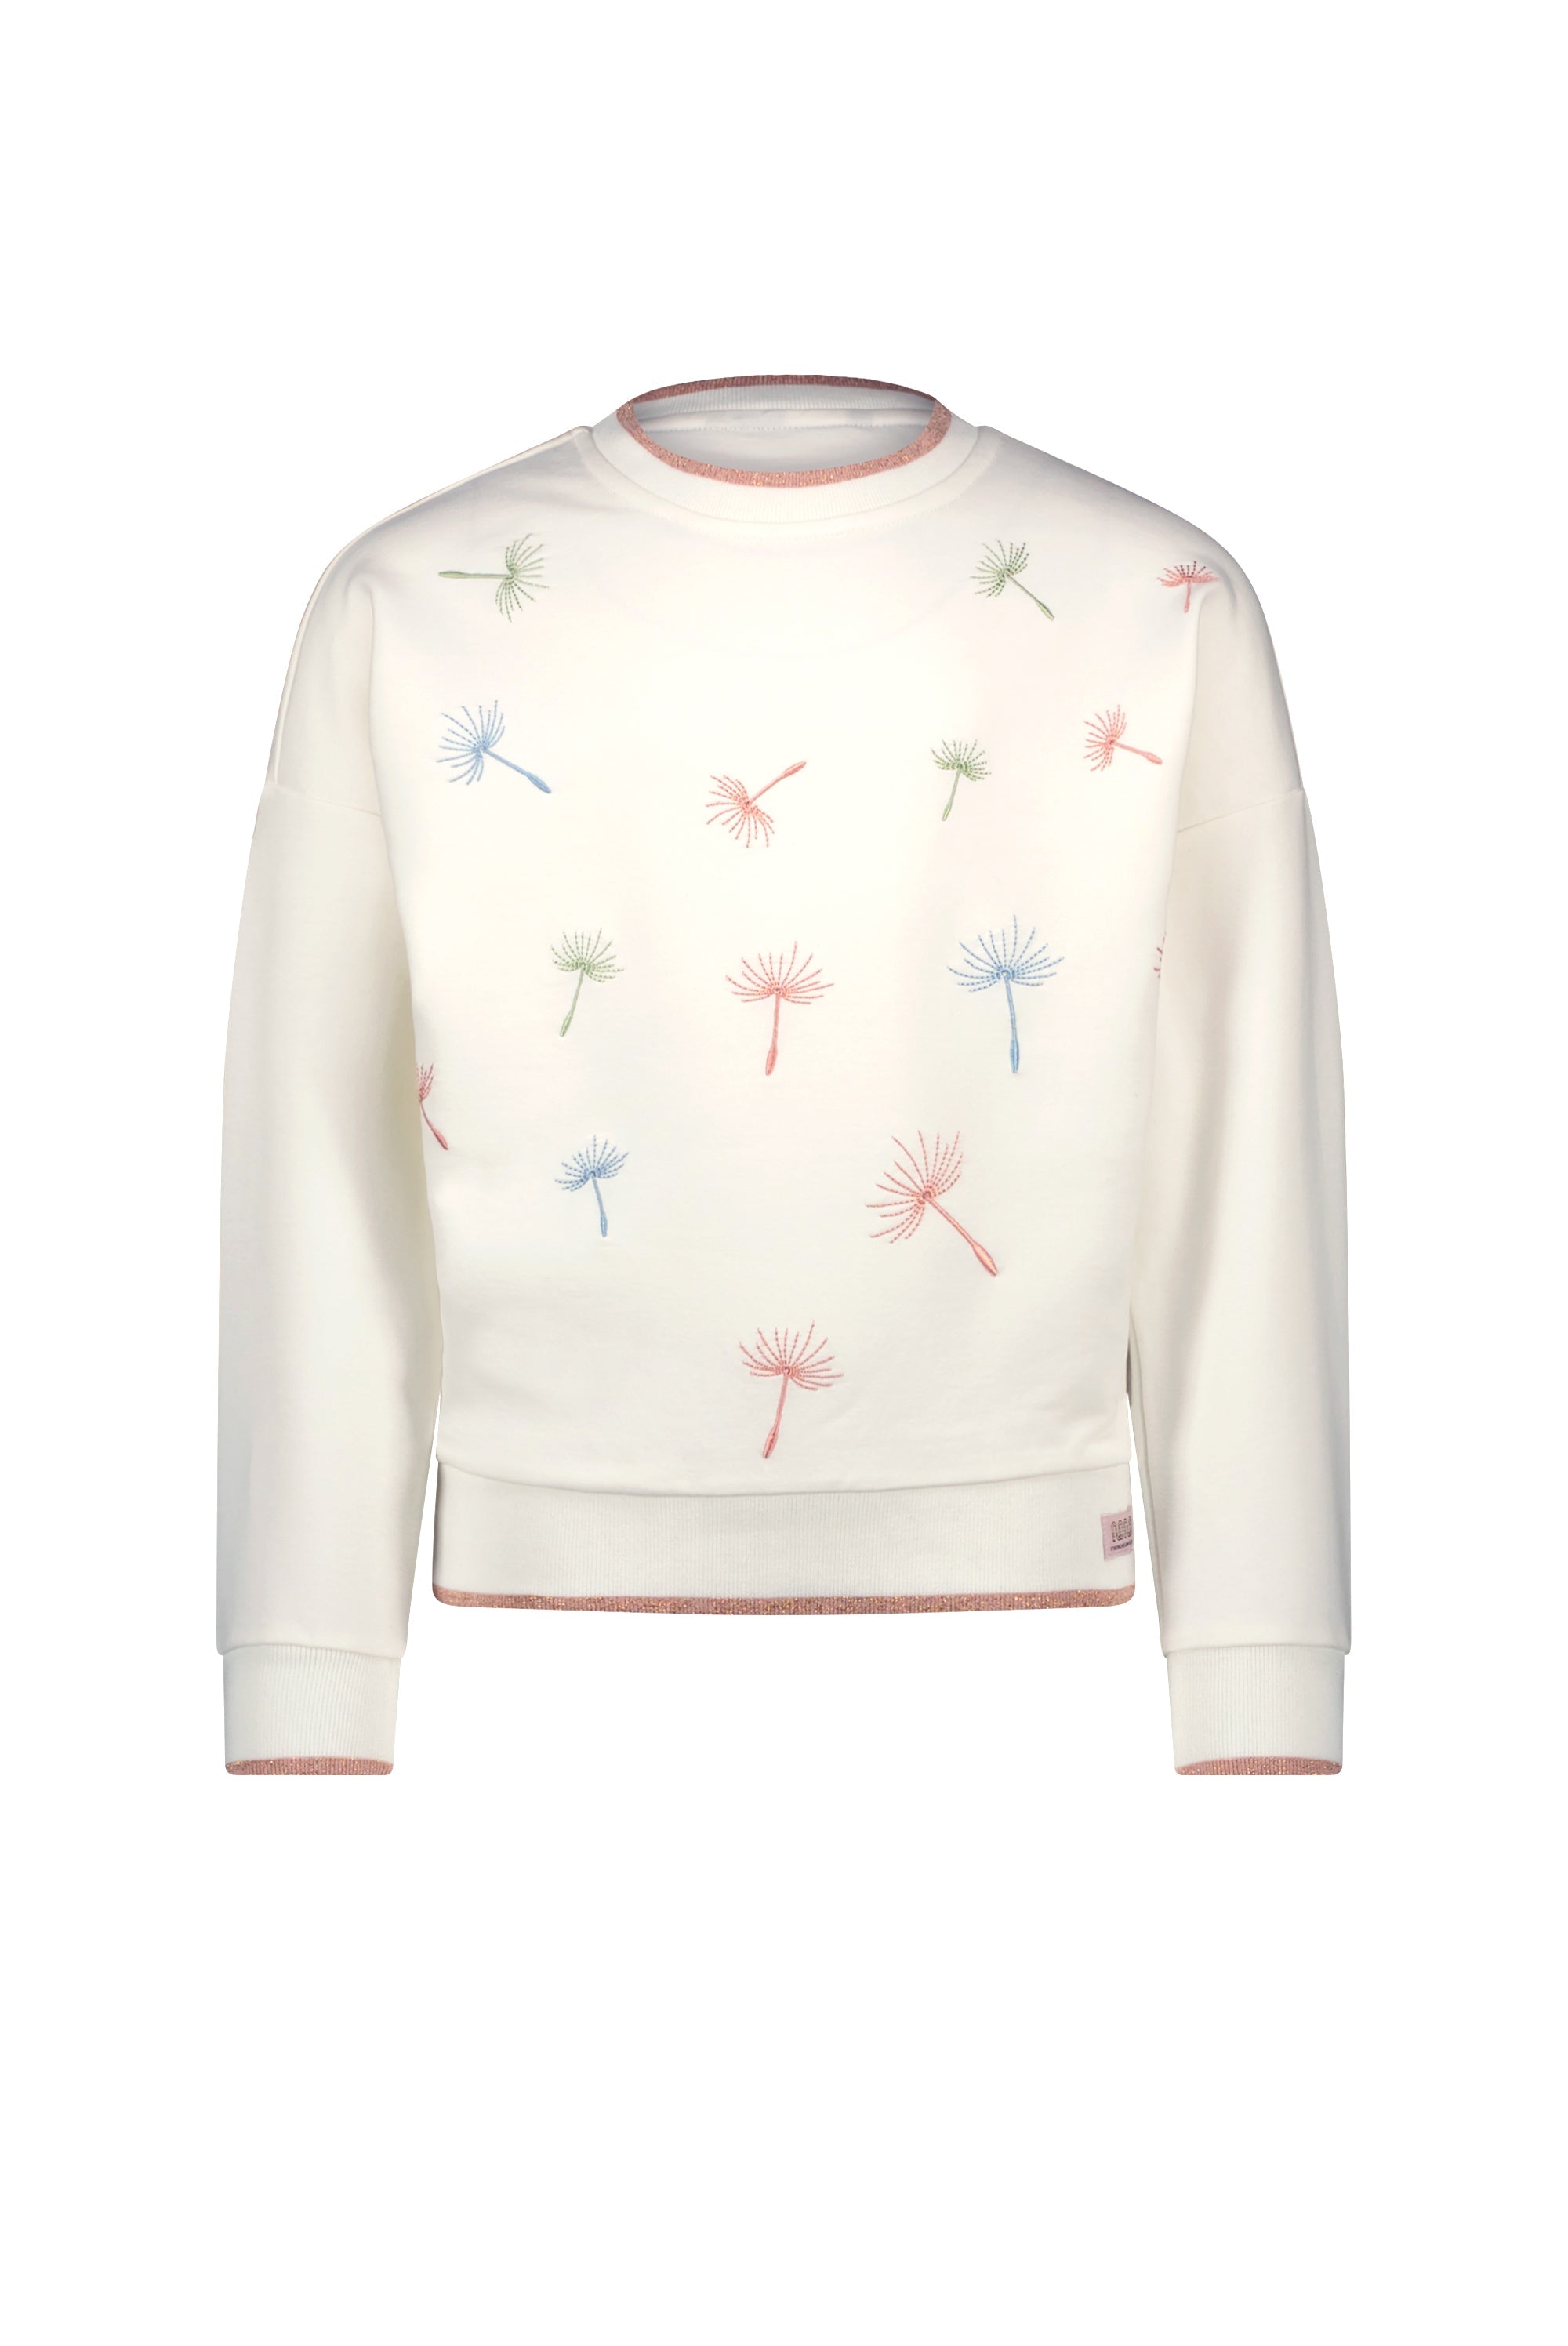 Meisjes Kessa round neck sweater with embroidered dandelions at chest van NoNo in de kleur Snow White in maat 134-140.